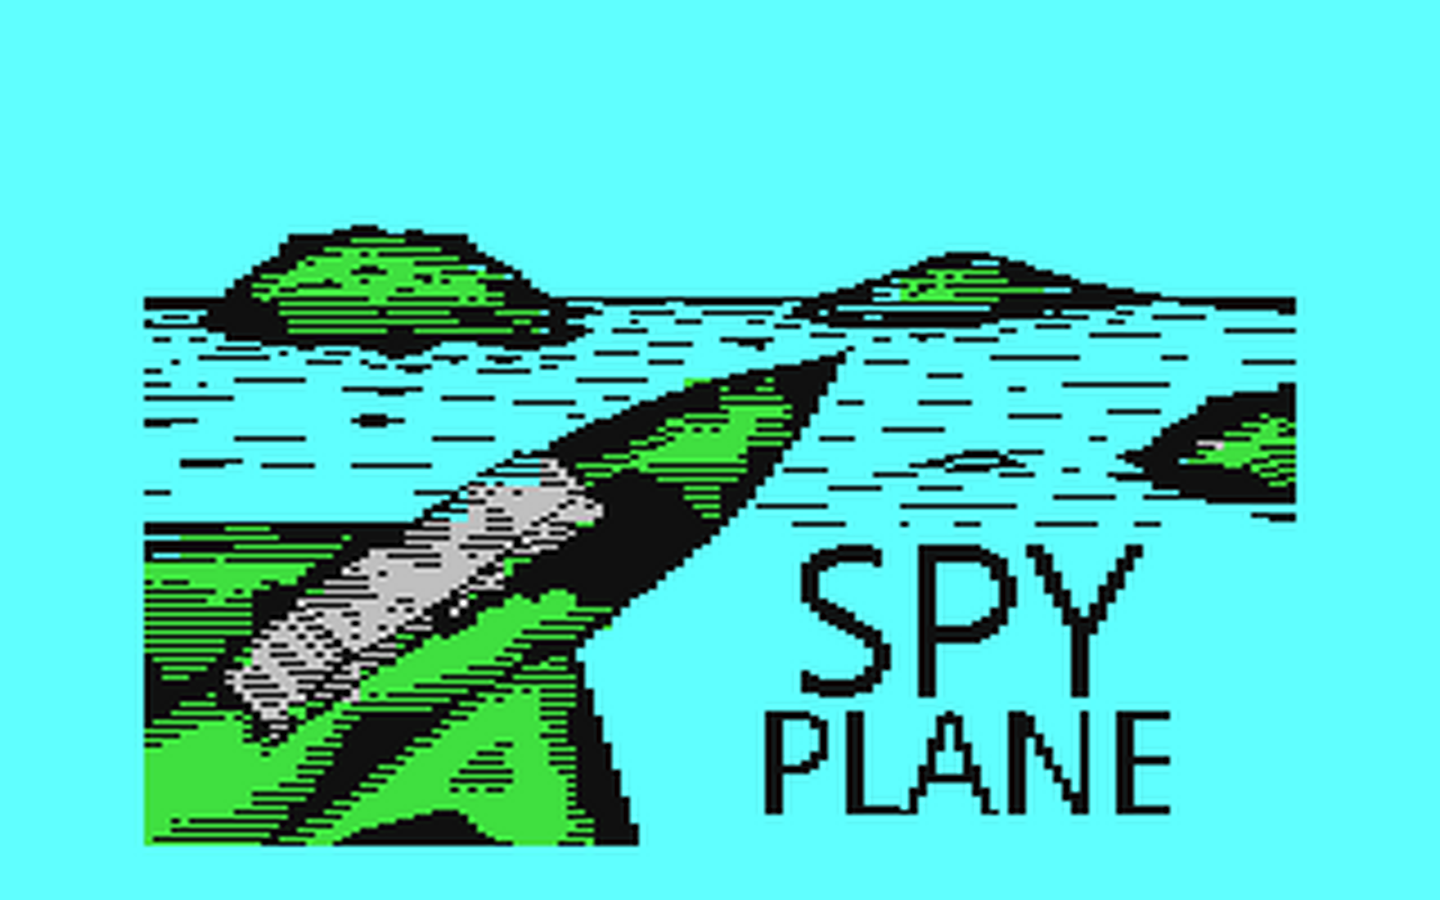 C64 GameBase Spyplane Gilsoft 1984